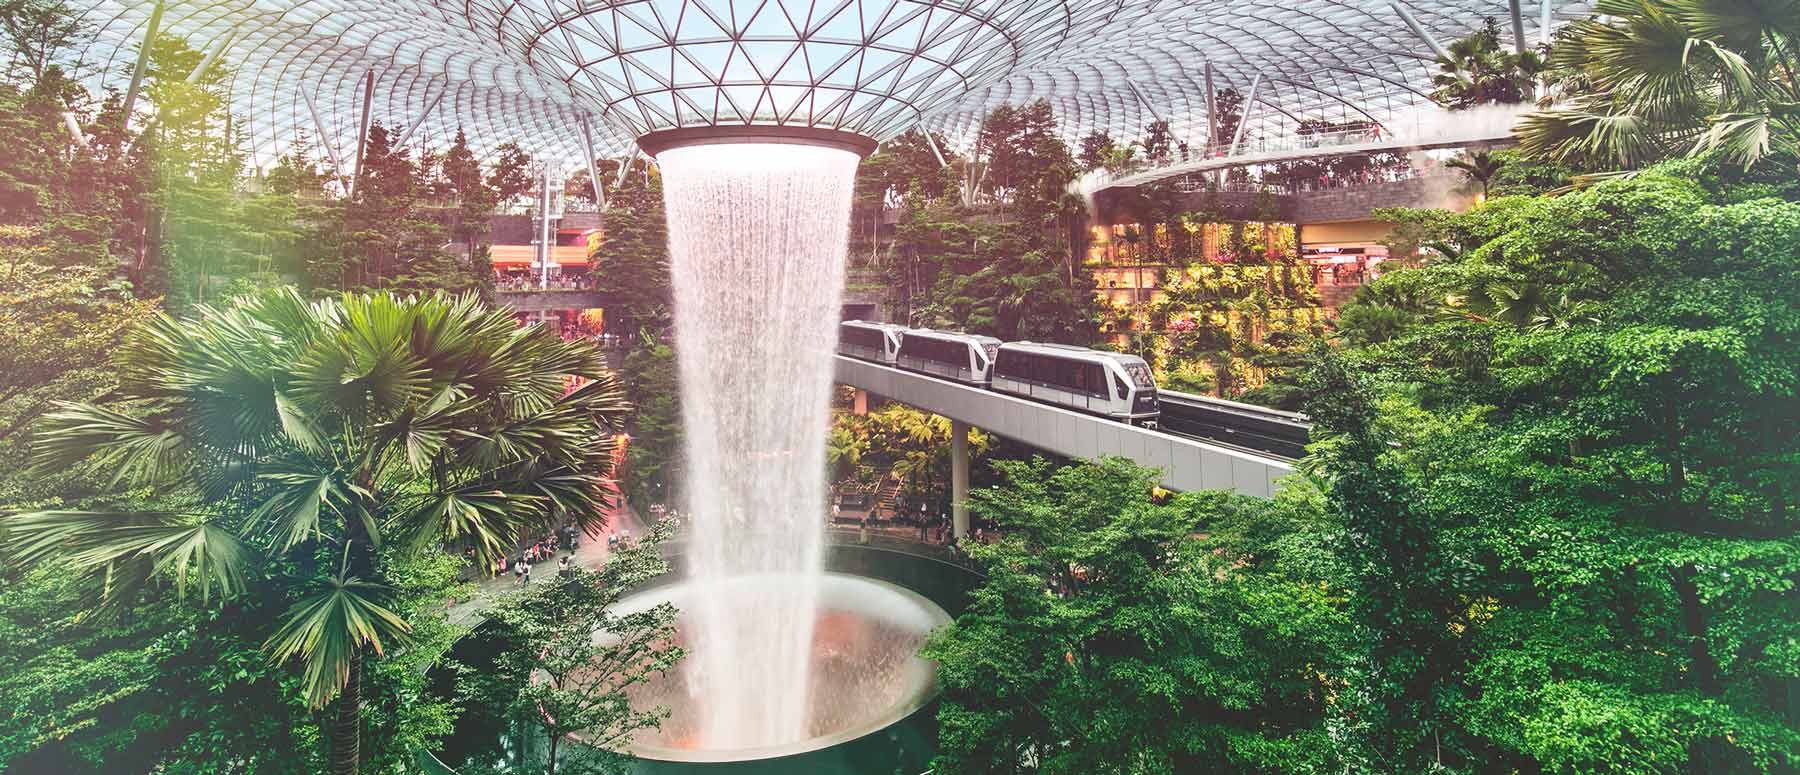 Changi Jewel Airport Rainfall Singapore